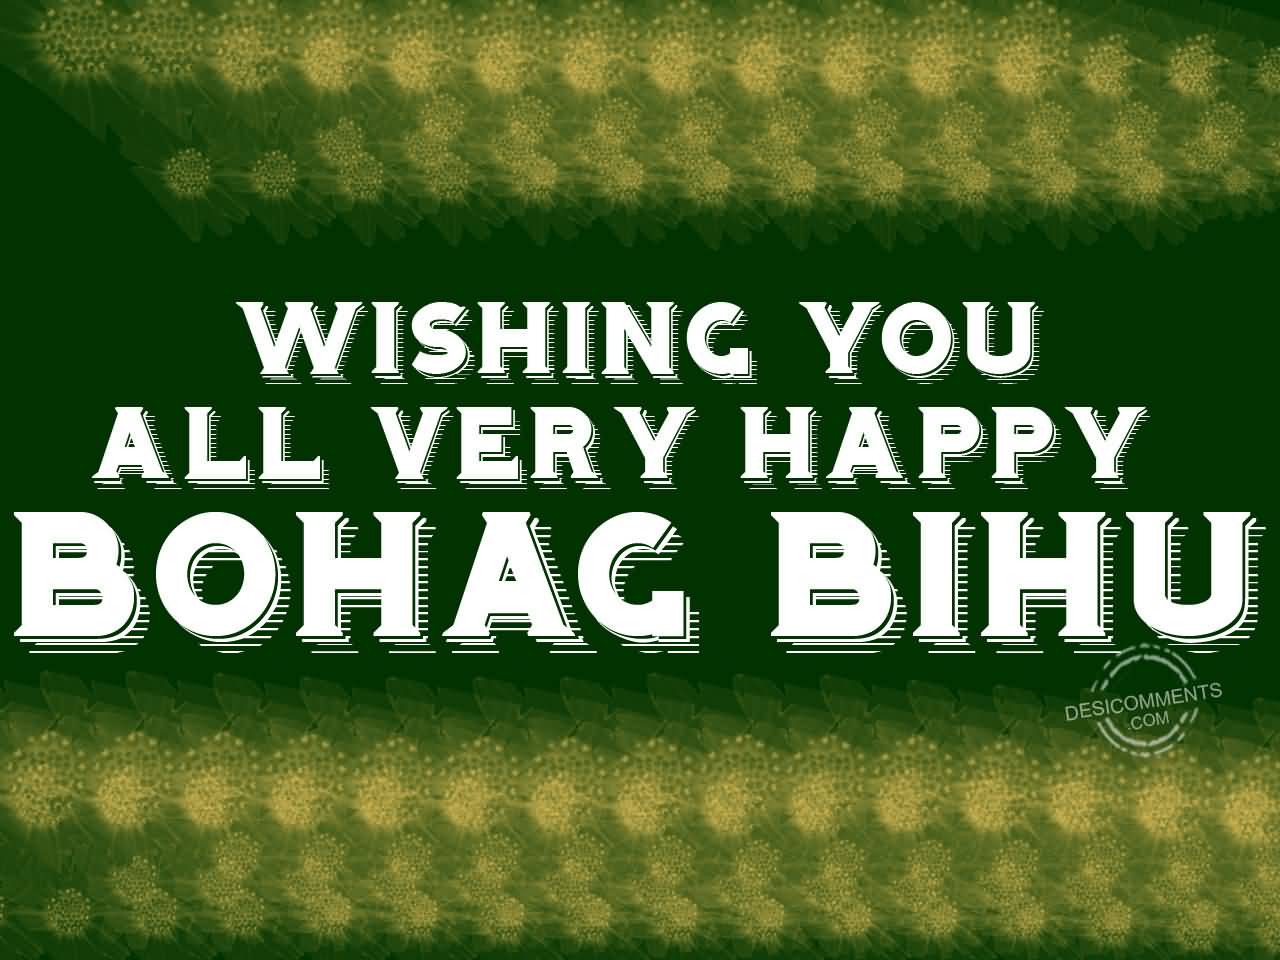 Wishing You All Very Happy Bohag Bihu